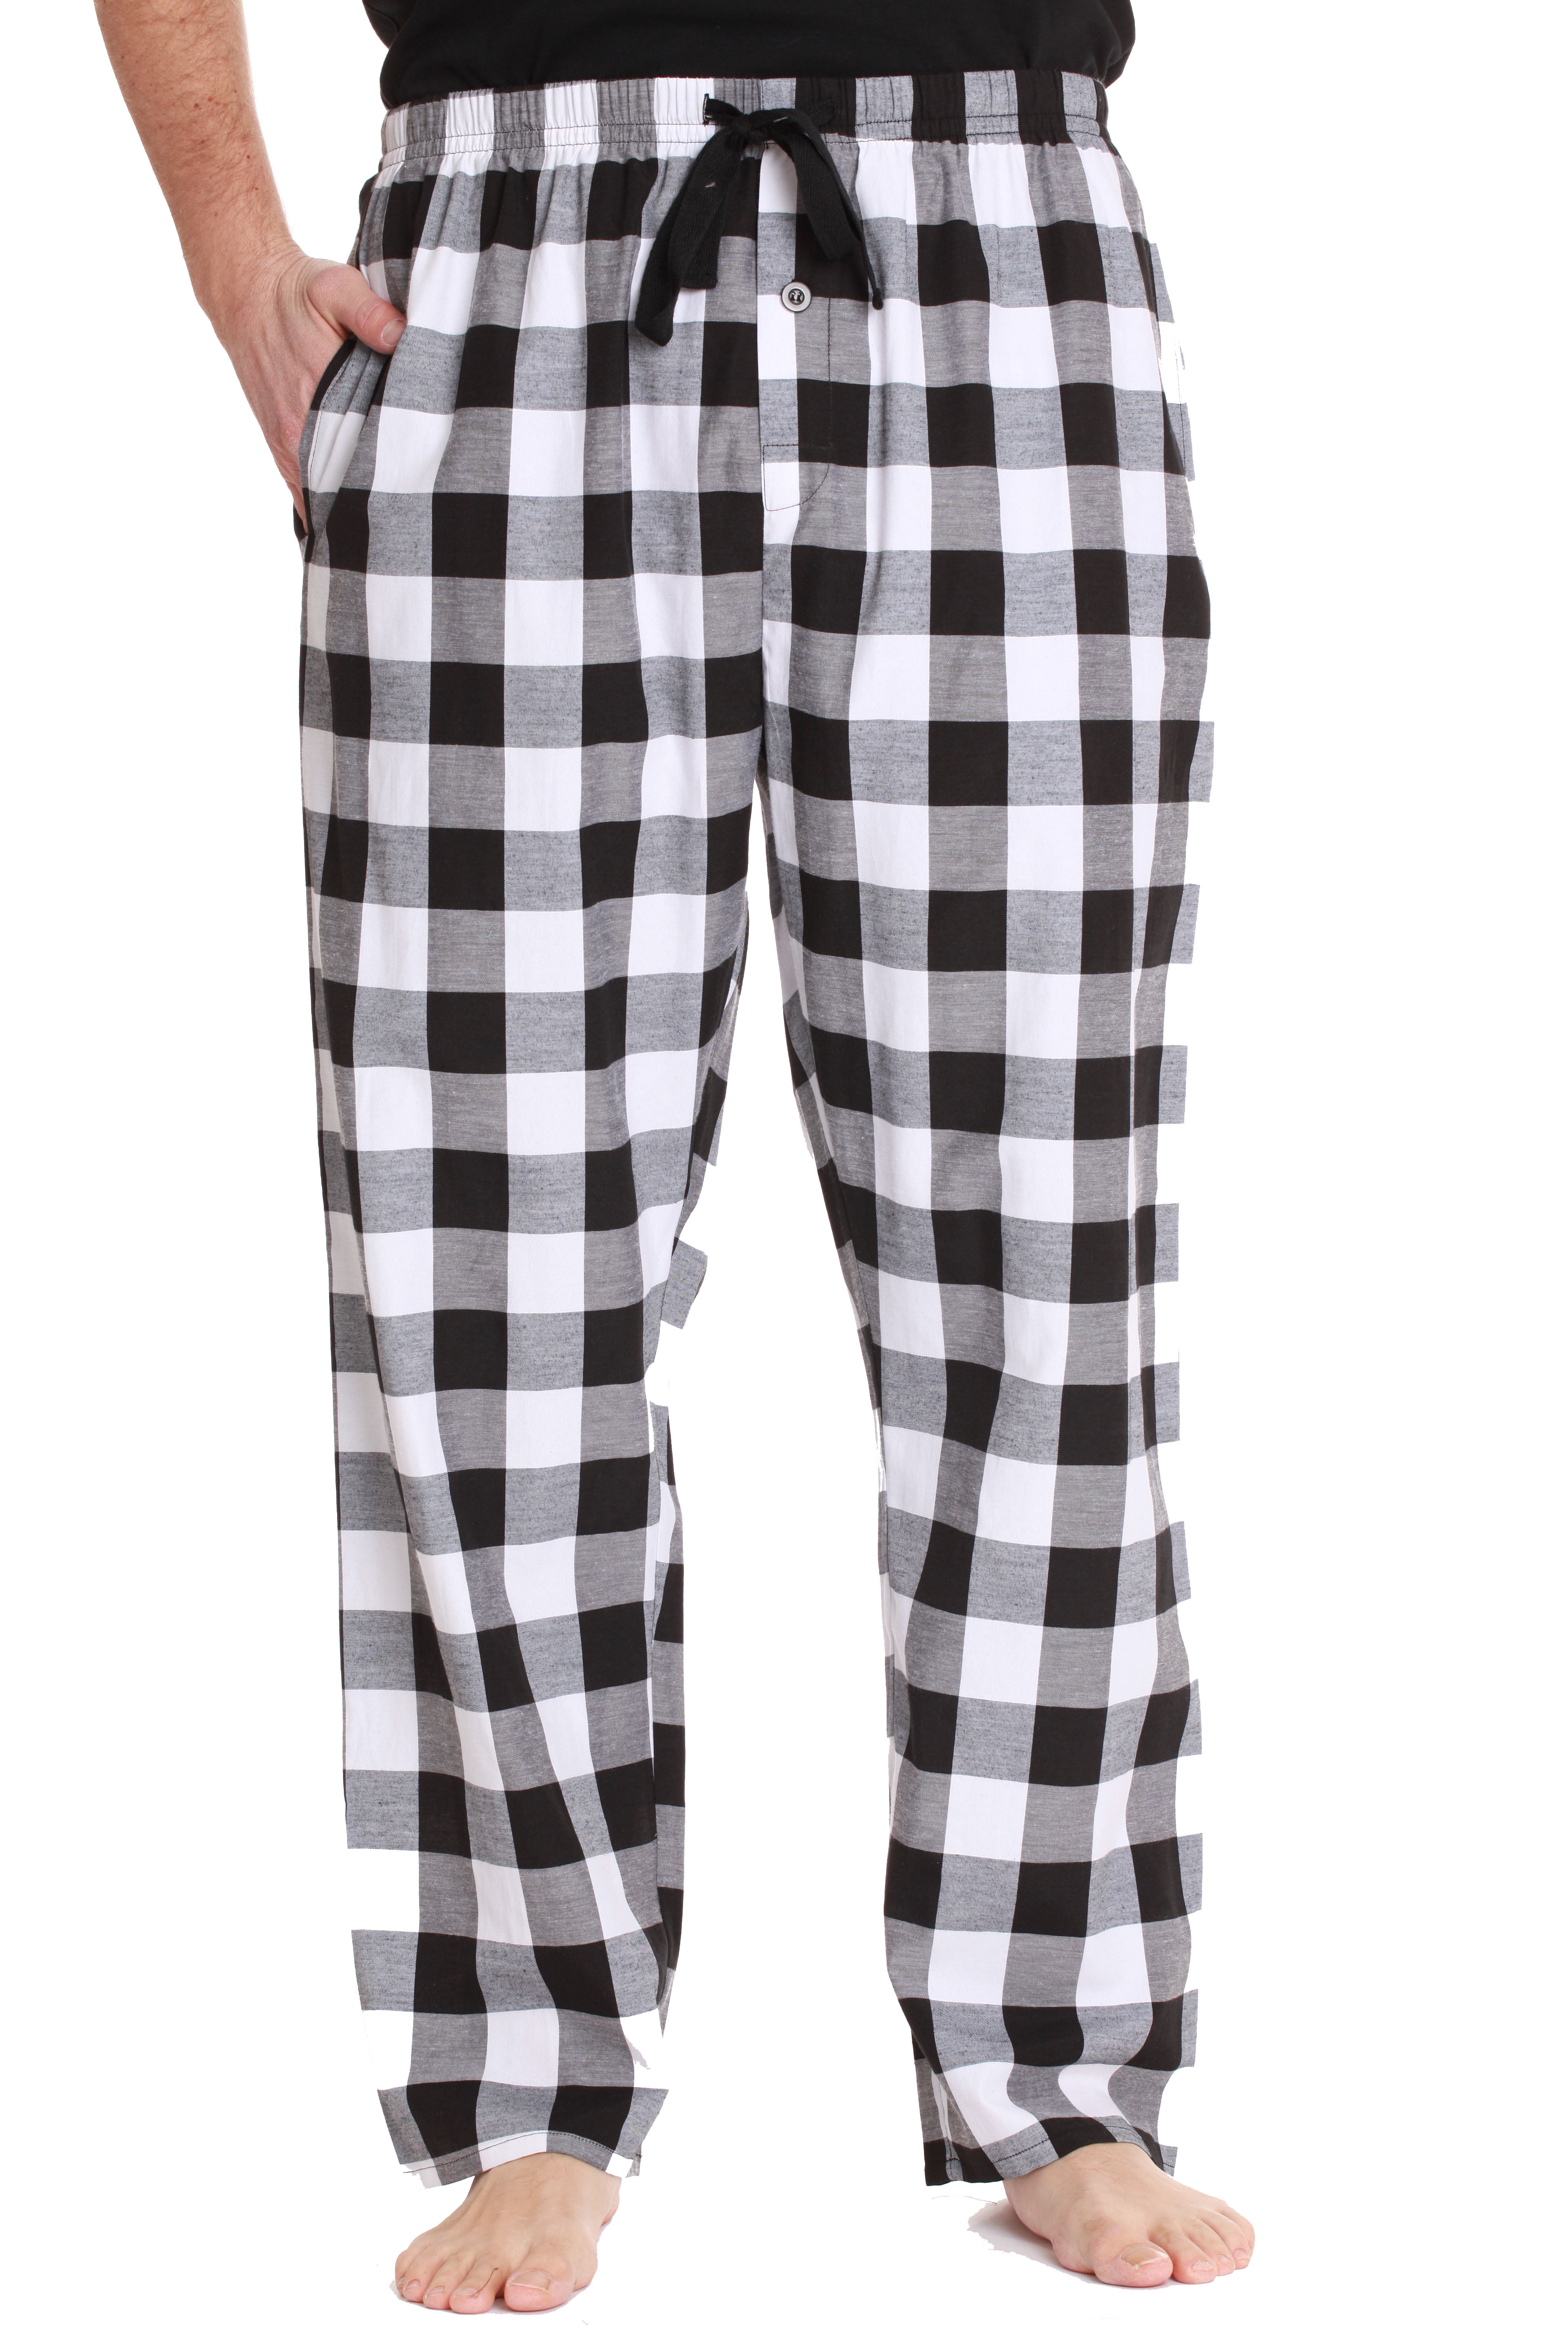 Followme - #followme Mens Plaid Poplin Pajama Pants with Pockets (Small ...